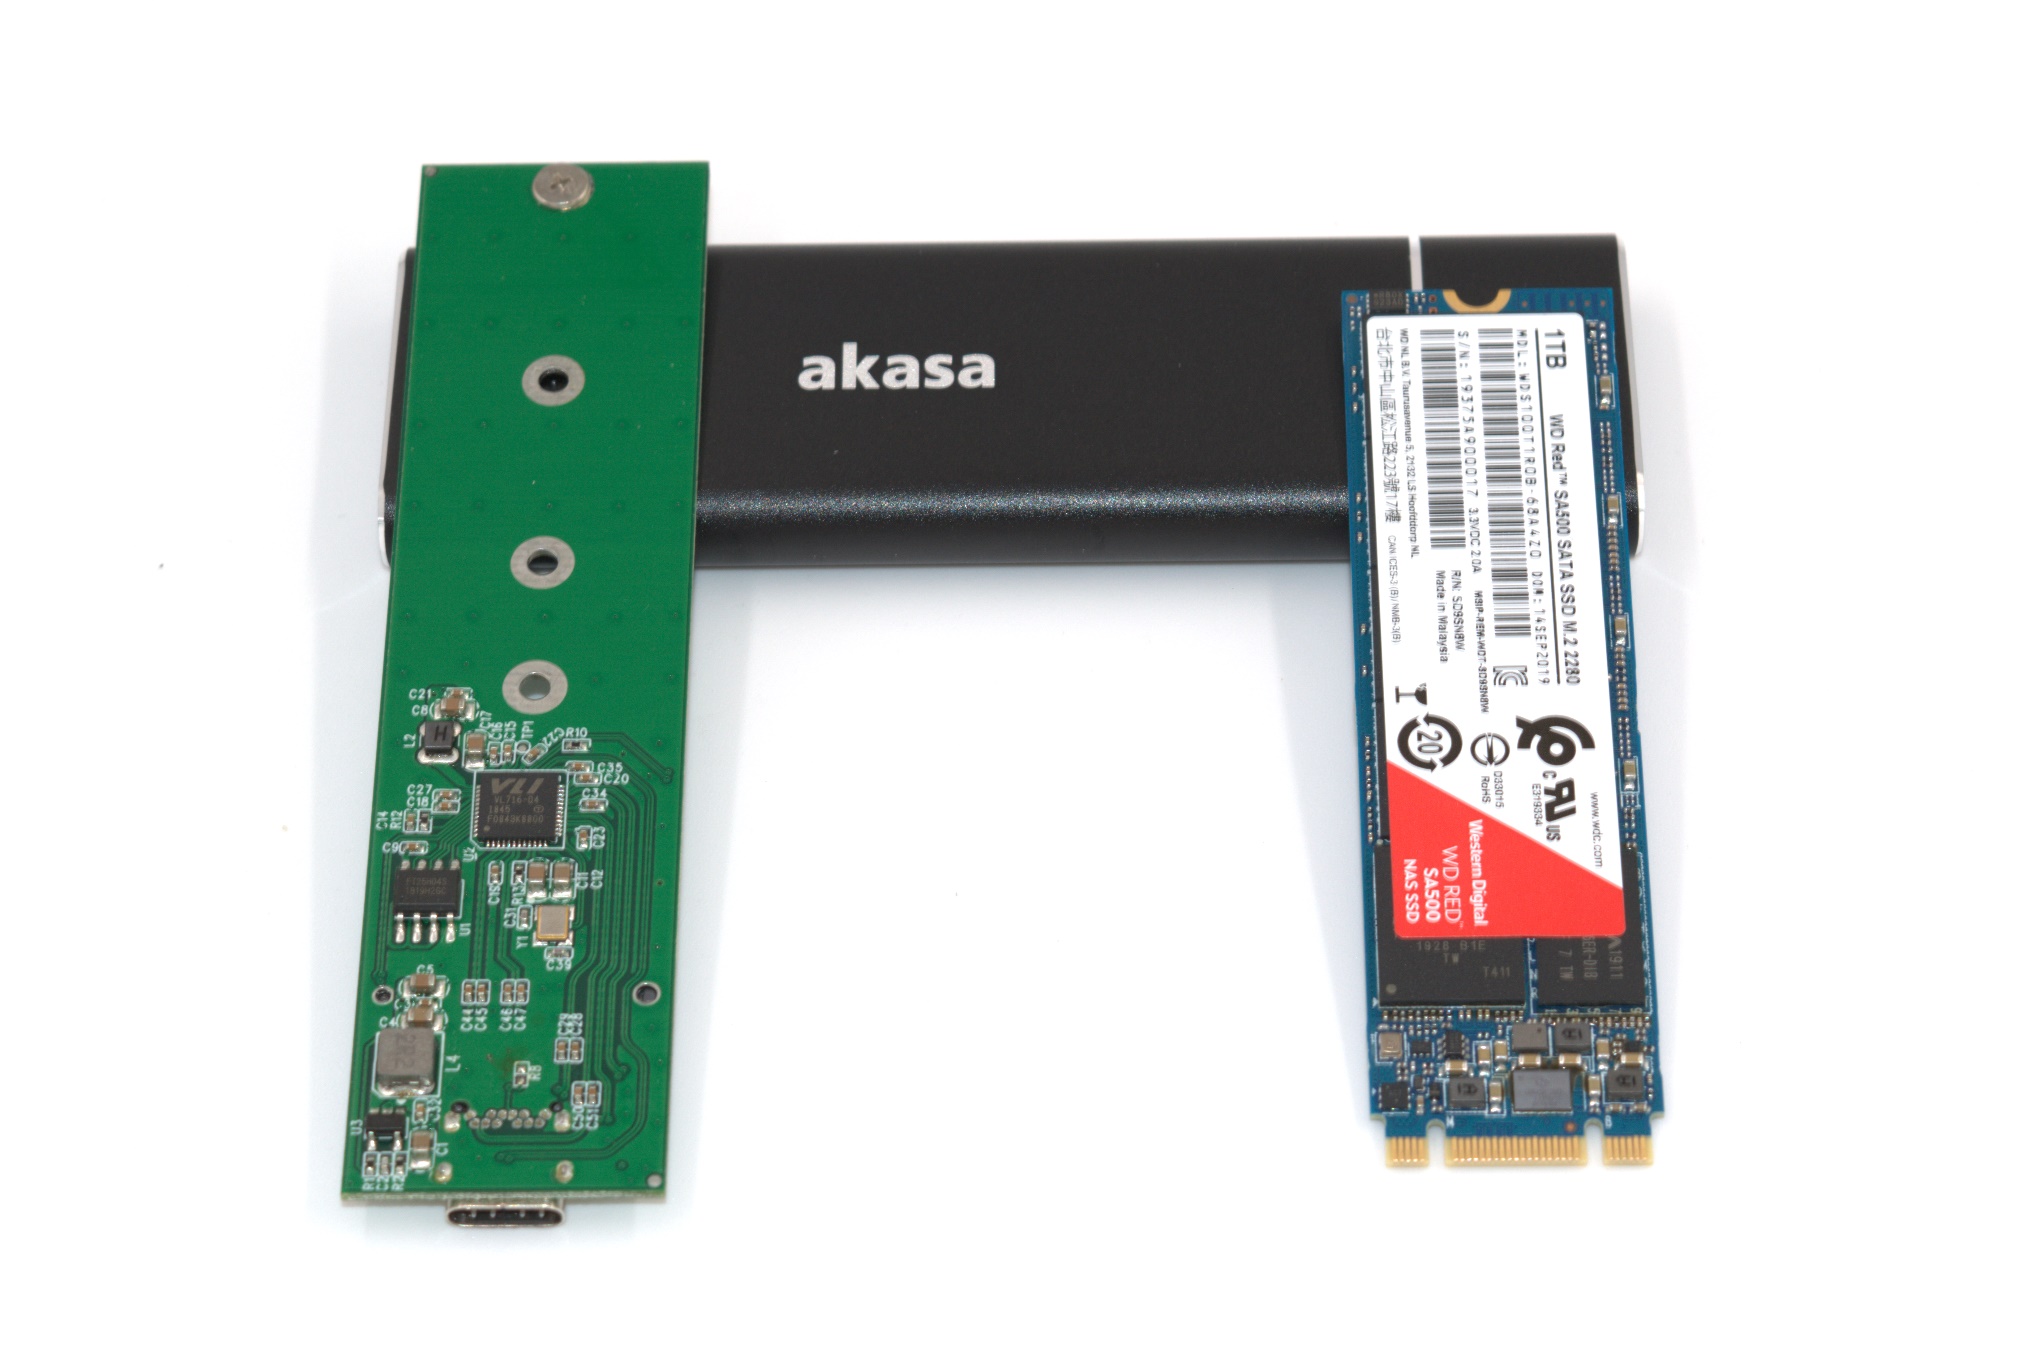 SuperSpeed 10 Gbps Akasa M.2 SATA/NVMe SSD to USB 3.1 Gen 2 Aluminium Enclosure AK-ENU3M2-04 Tech for Techs Recommended External Hard Drive Enclosure